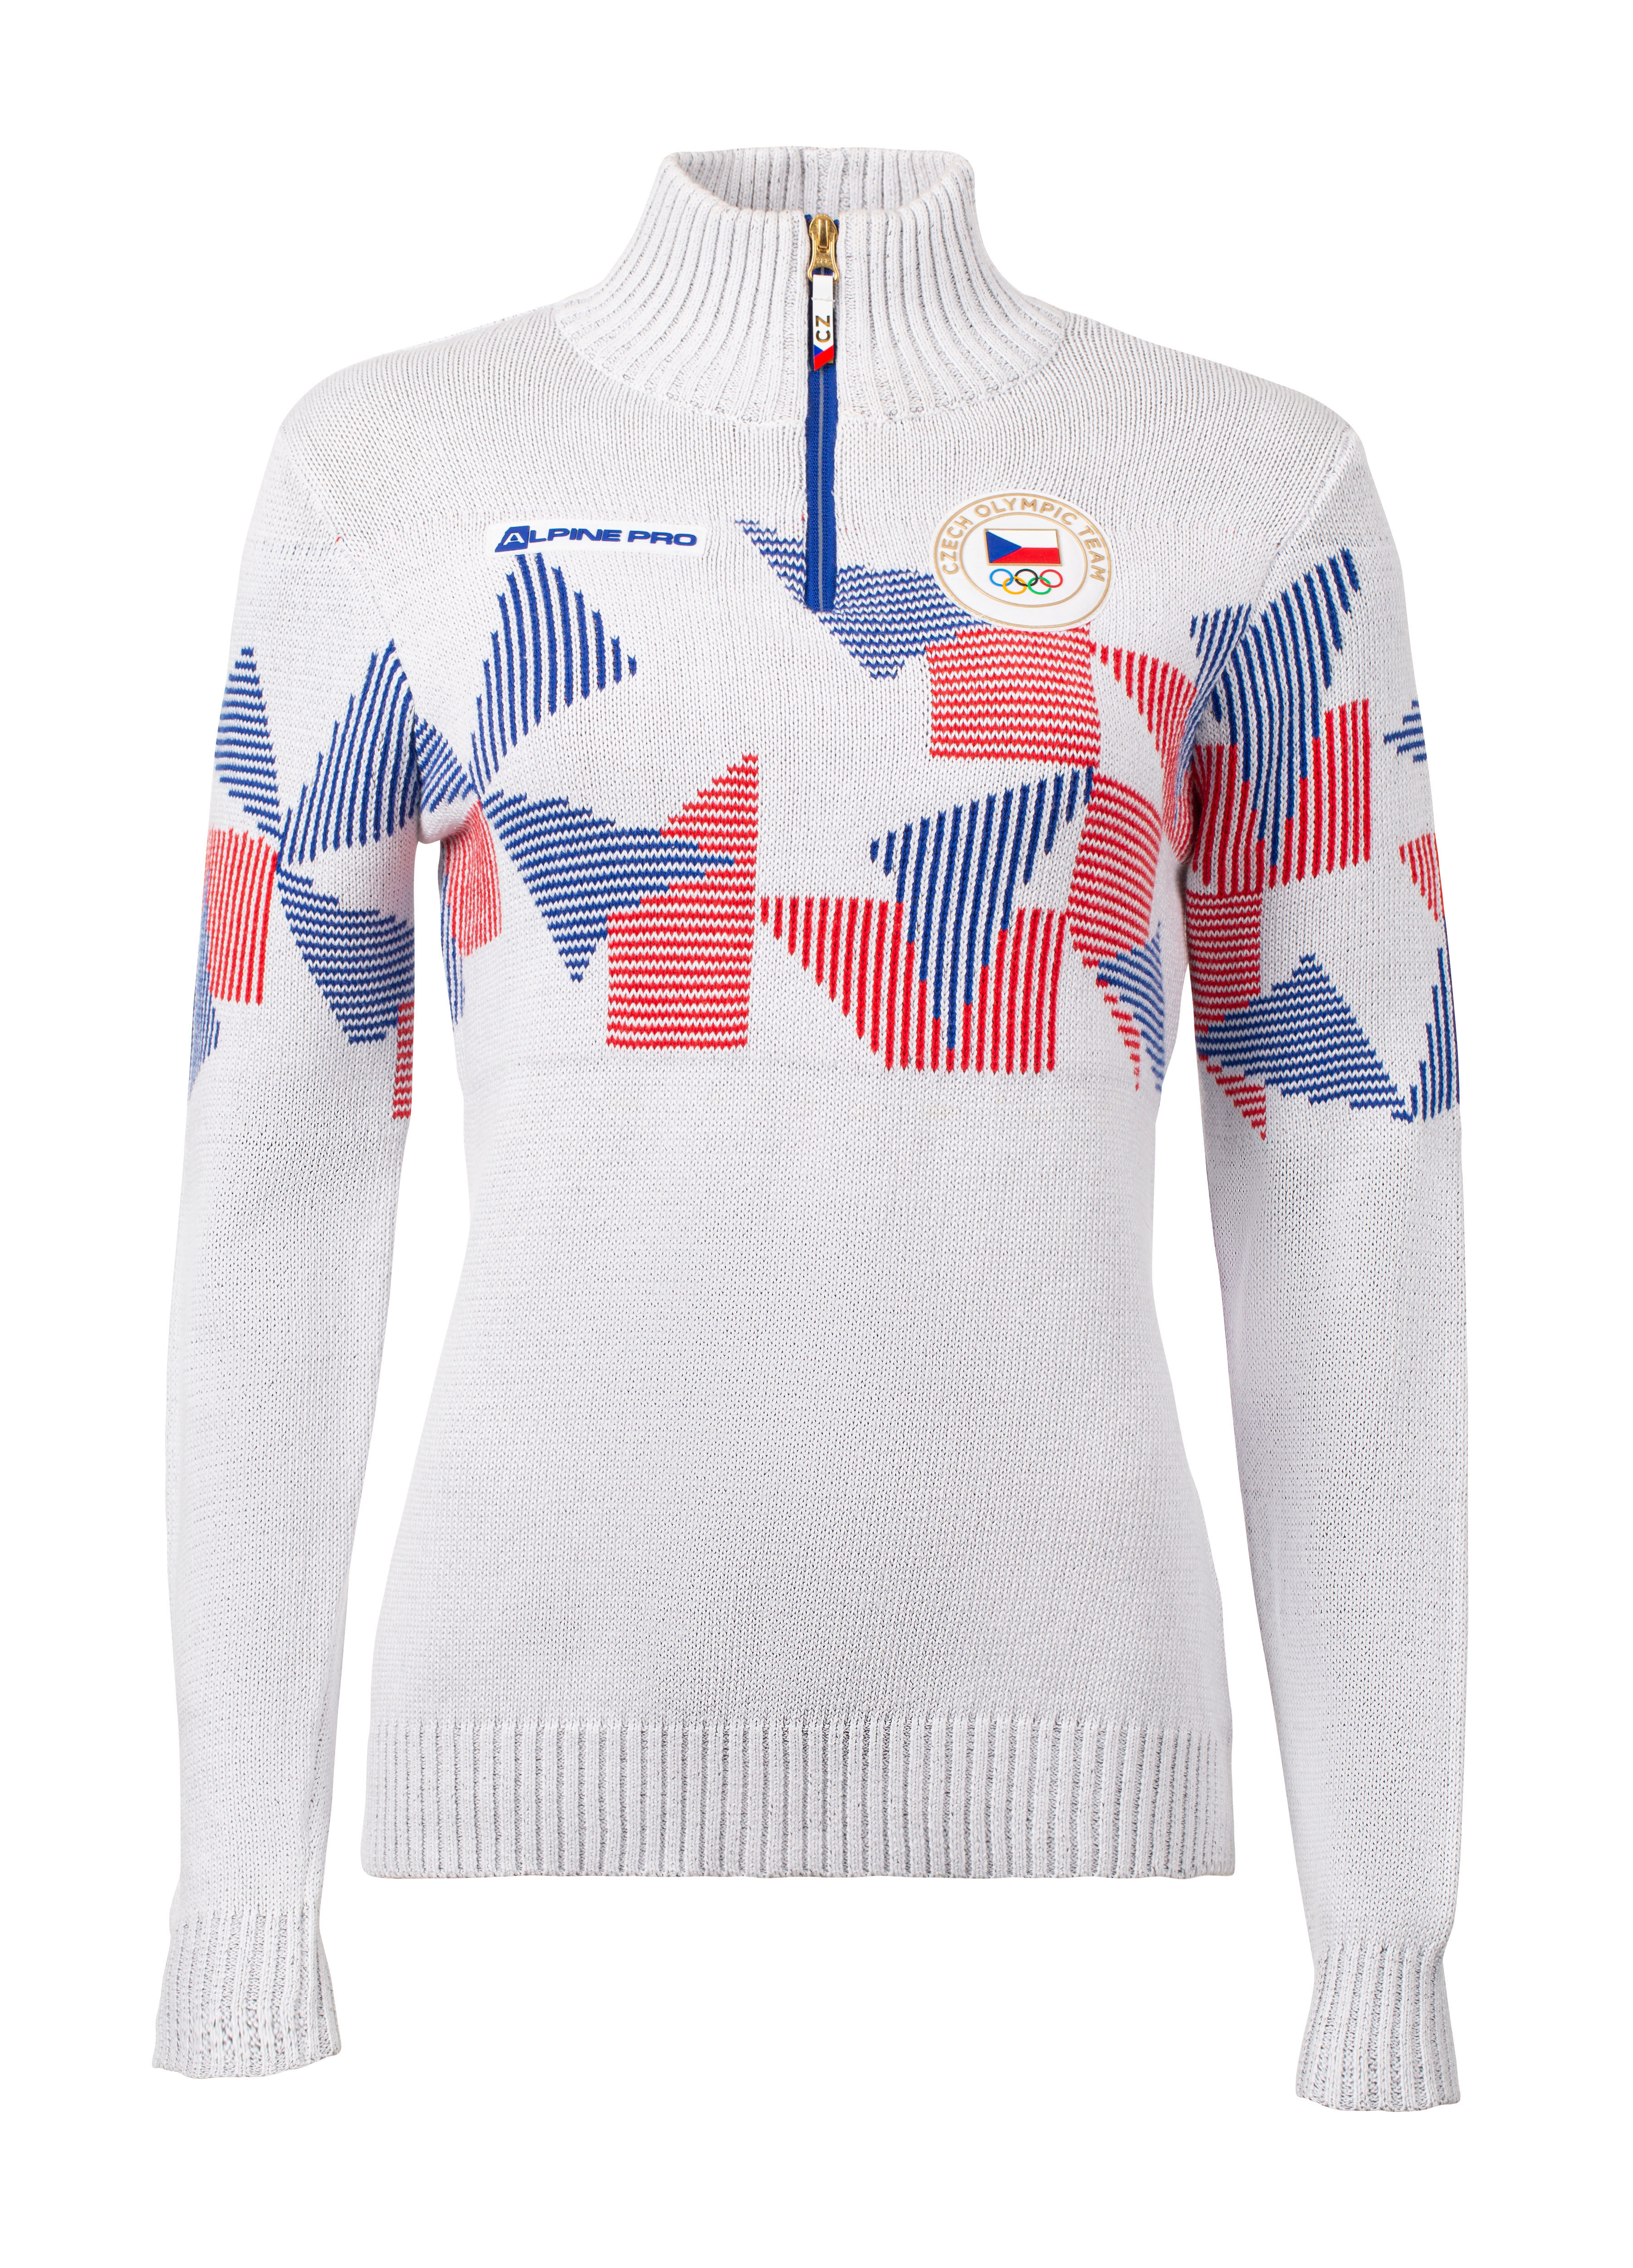 Dámsky sveter z olympijskej kolekcie ALPINE PRO JIGA biely variant m